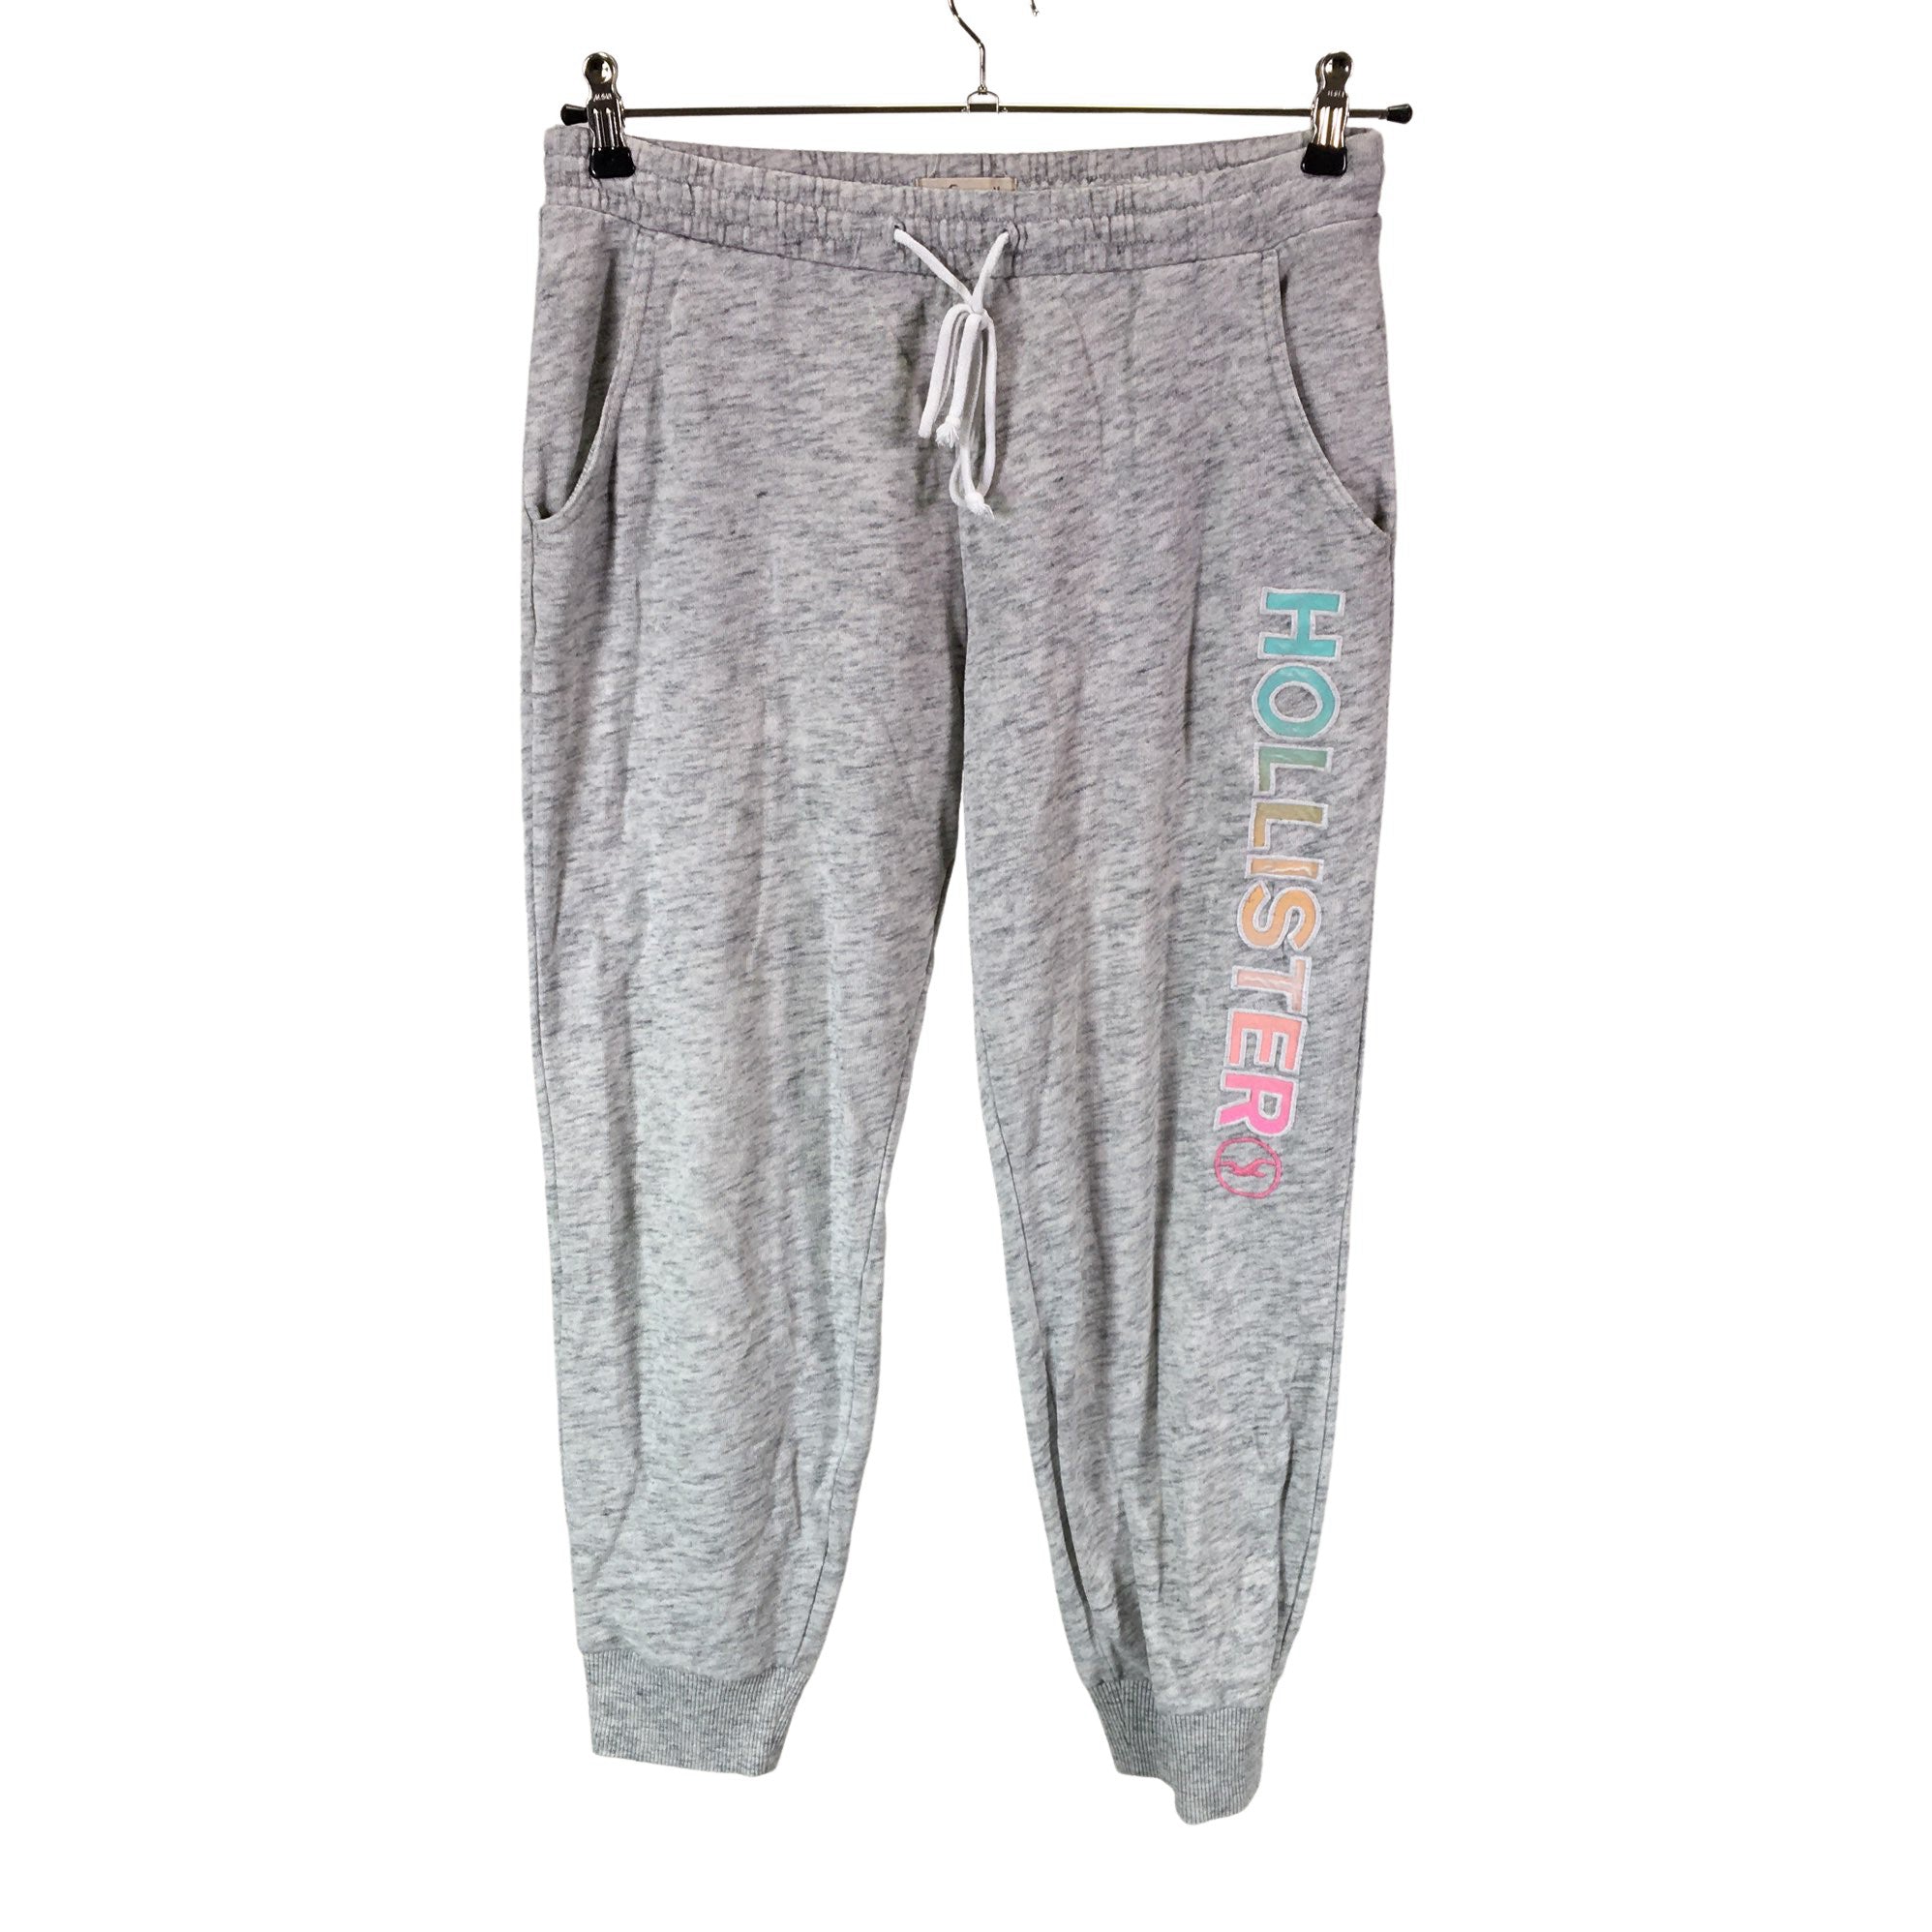 Women's Hollister Sweatpants, size 38 (Grey)